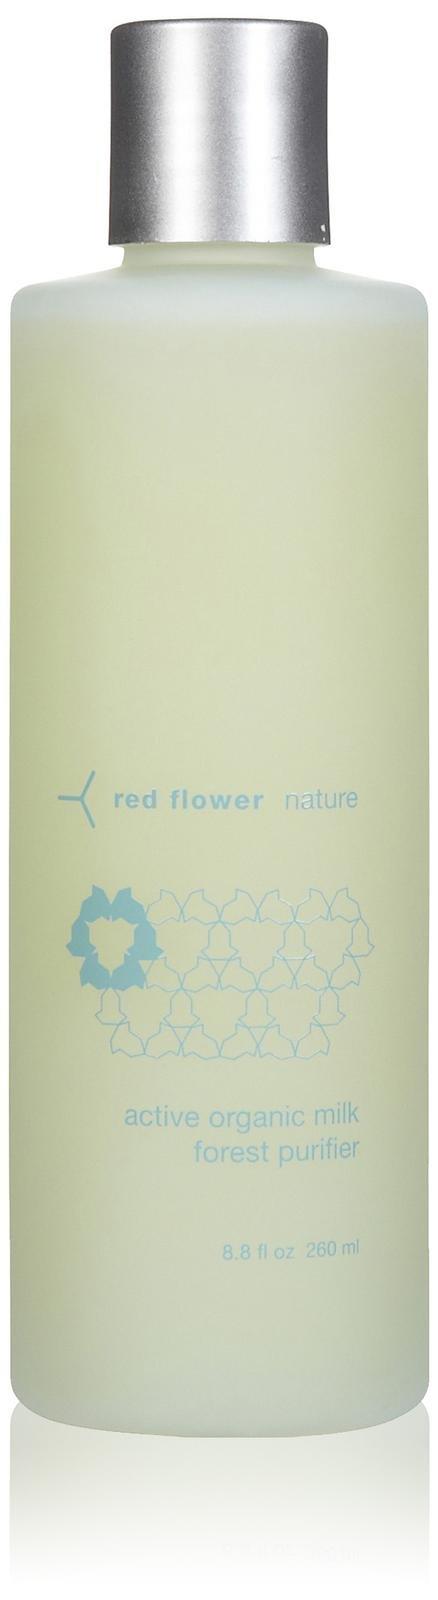 Red Flower Active Organic Milk Forest Purifier